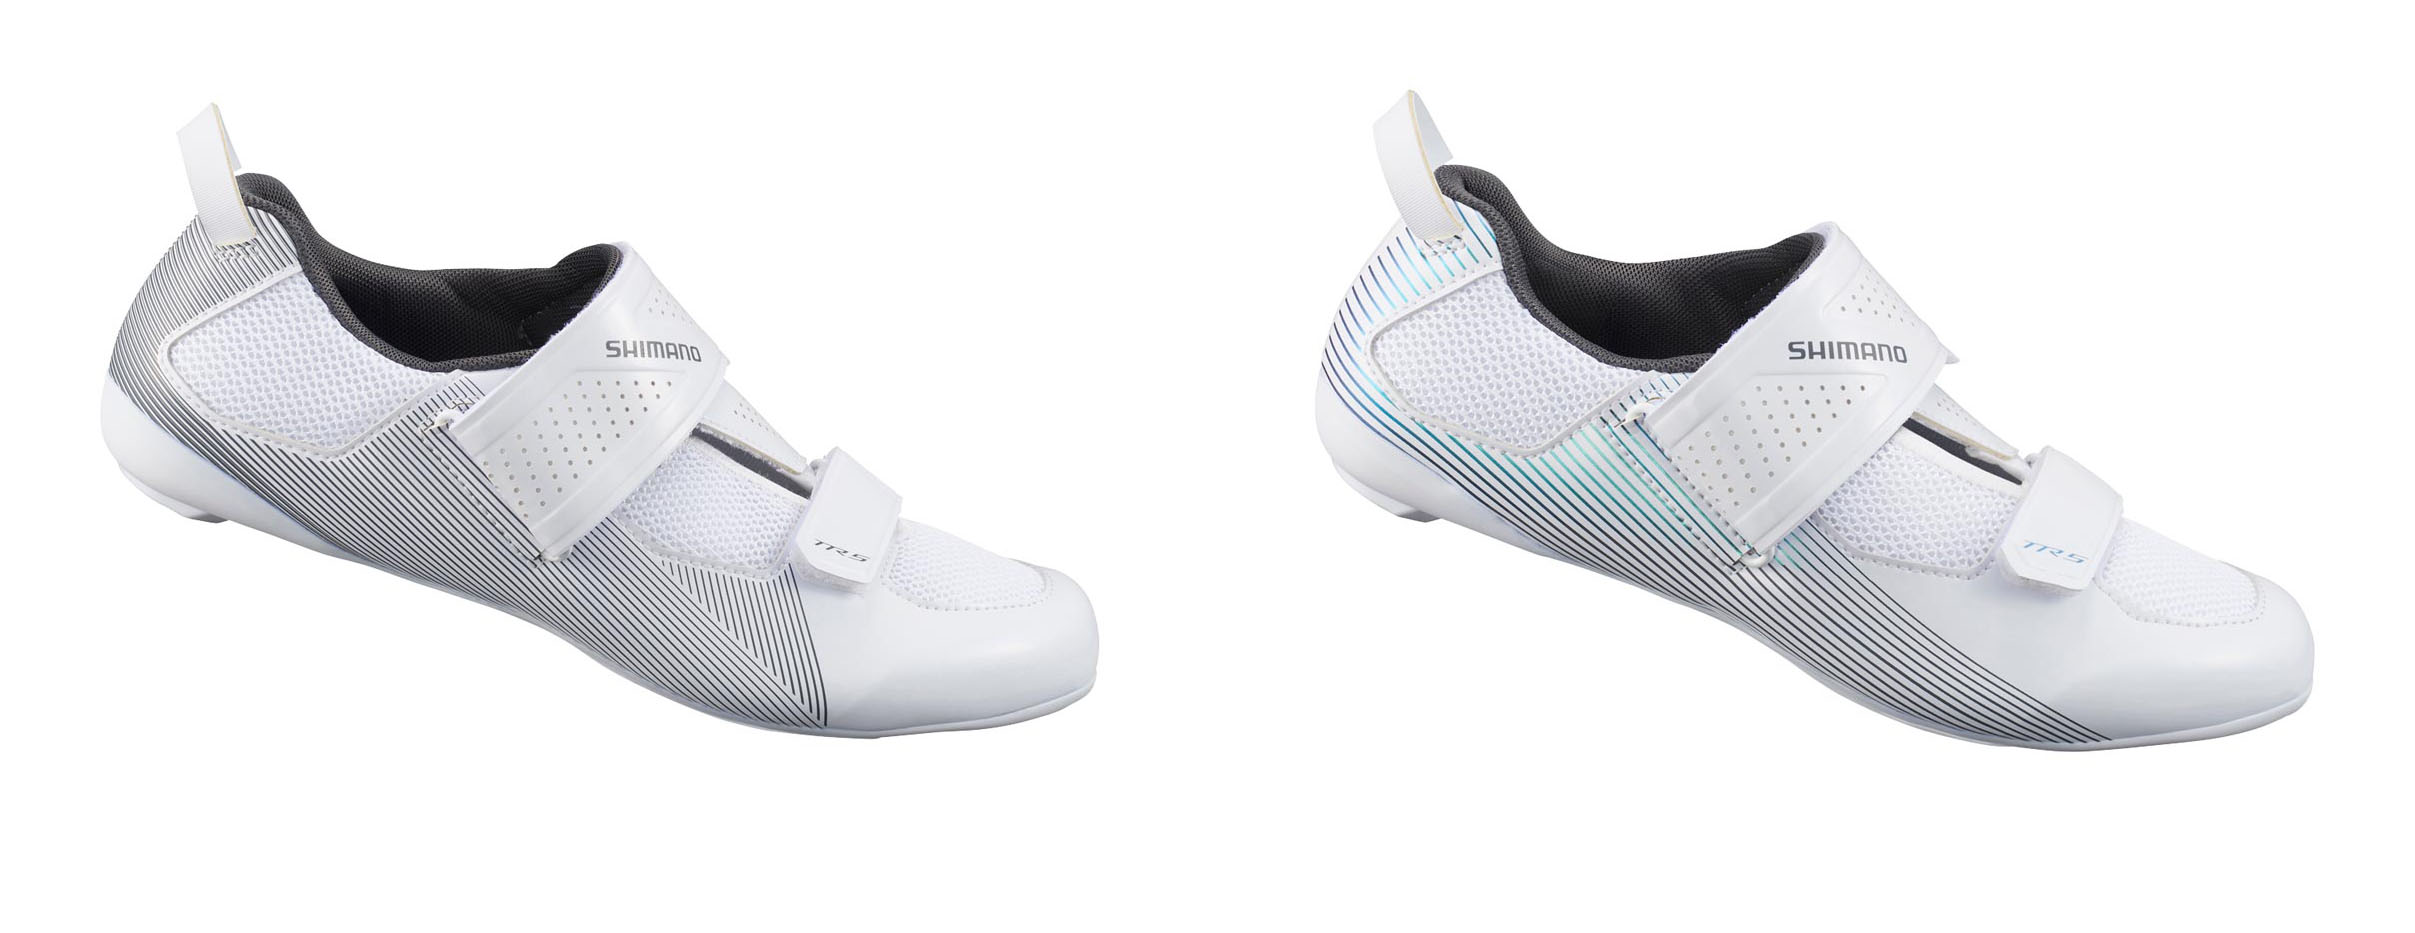 New TR5 & TR5W Triathlon Shoes